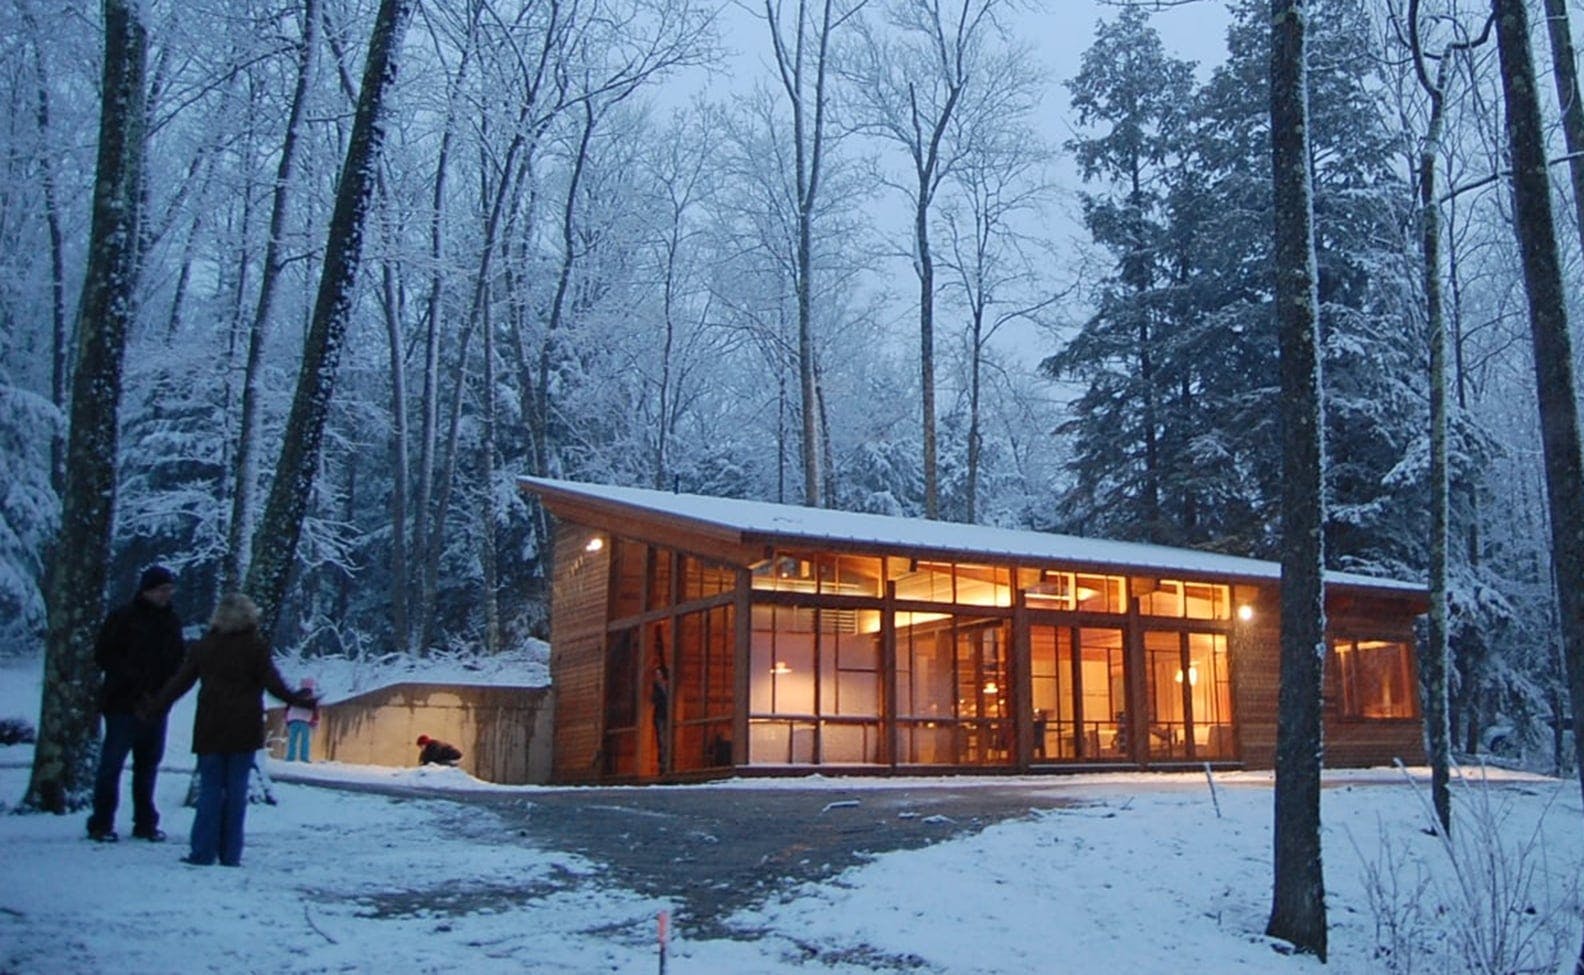 Berkshire Cabin in the snow